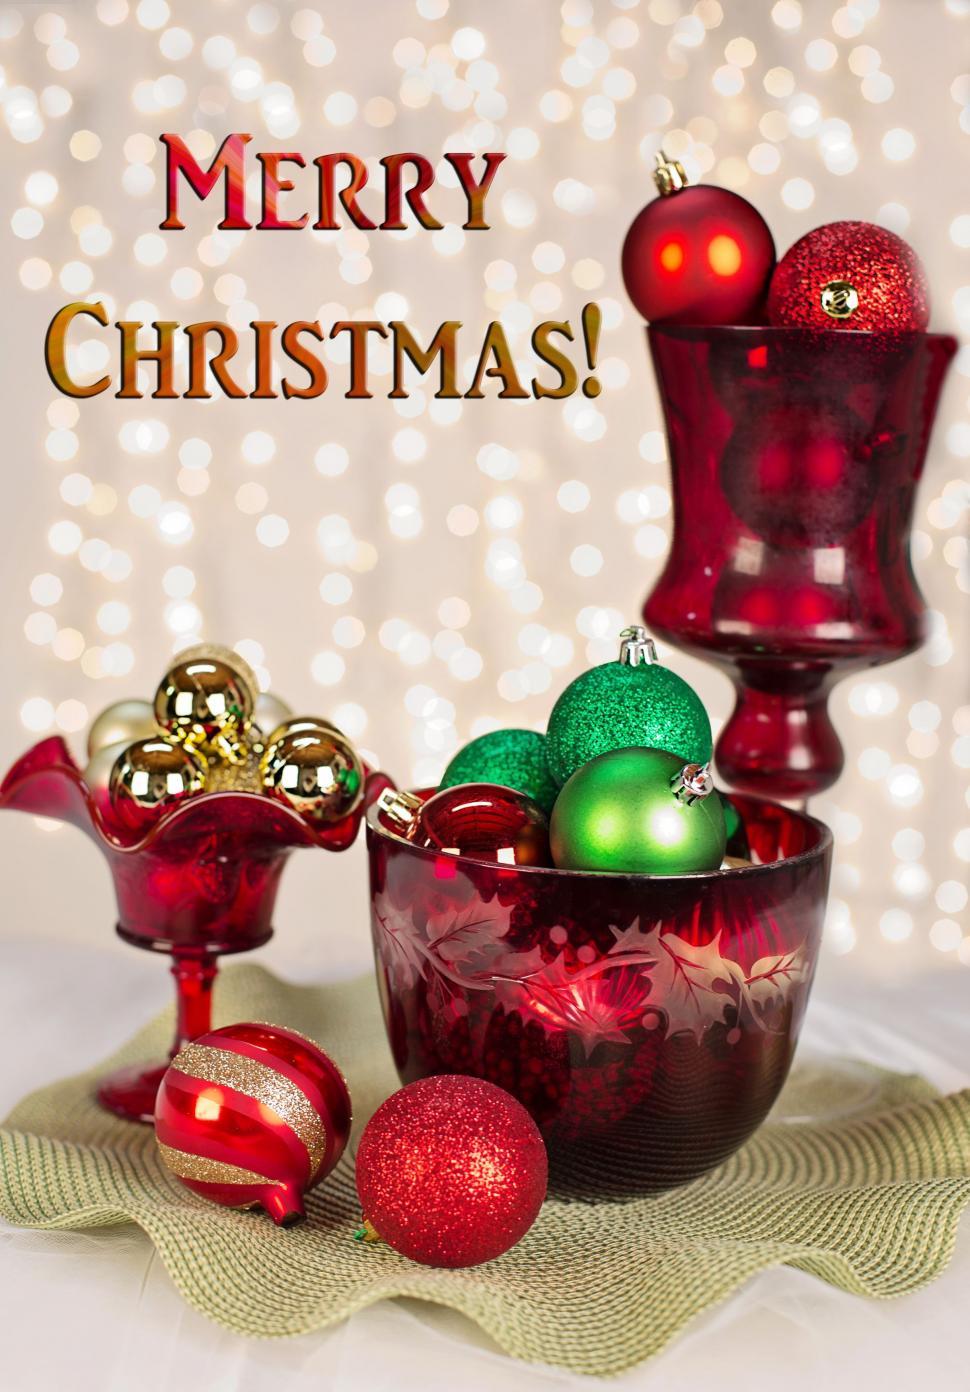 Free Image of Christmas Ornaments and Bokeh Lights  